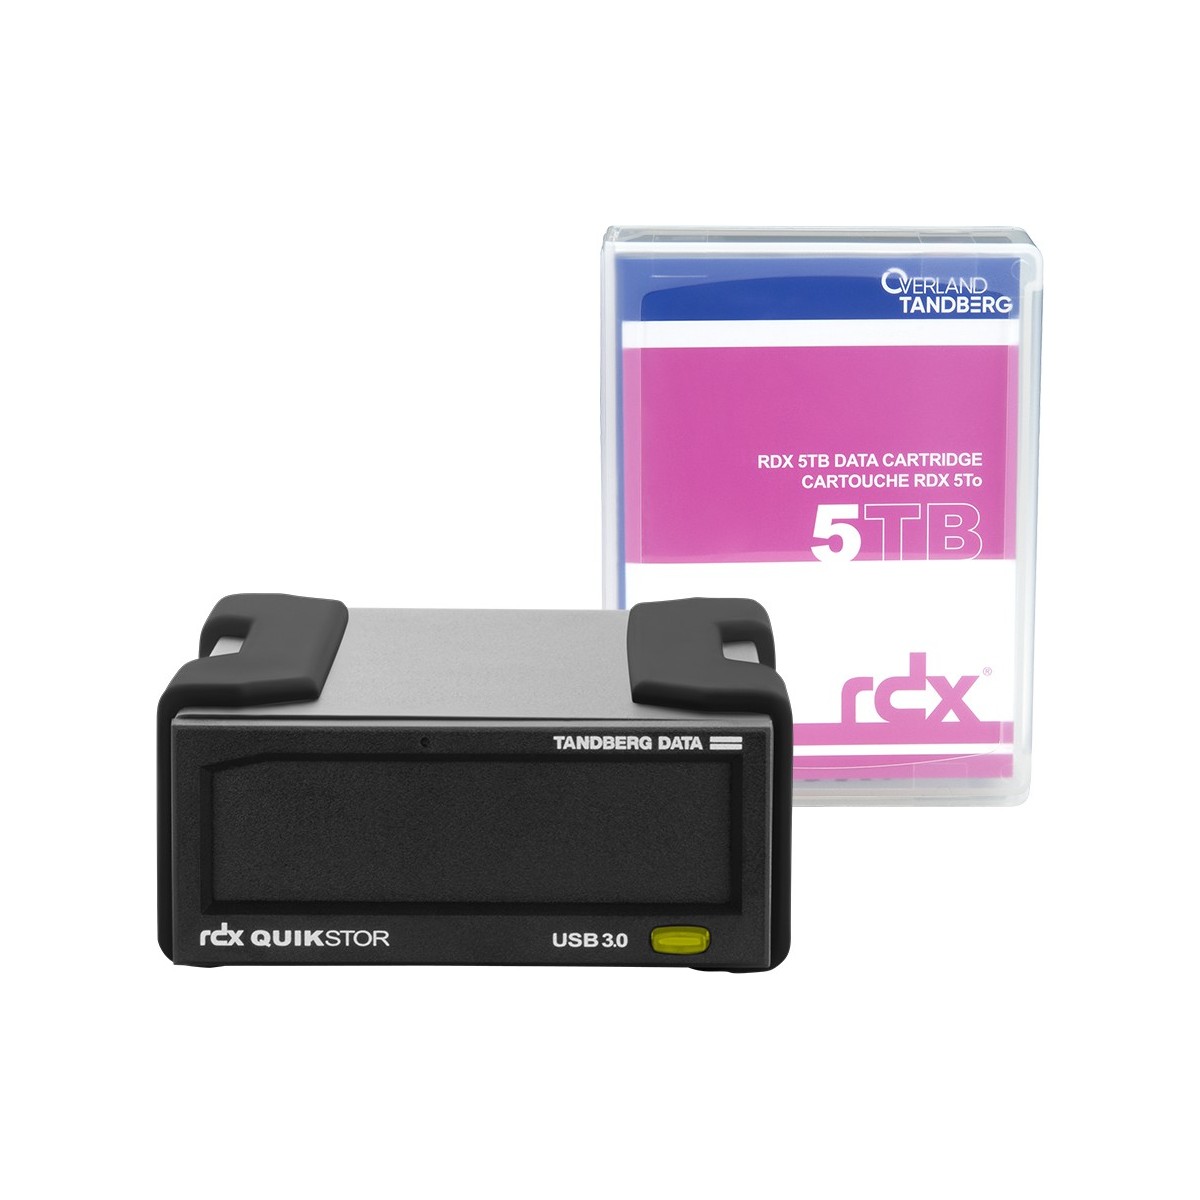 Overland-Tandberg RDX Quikstor External kit 5 TB USB+ - Drive - 5,000 GB